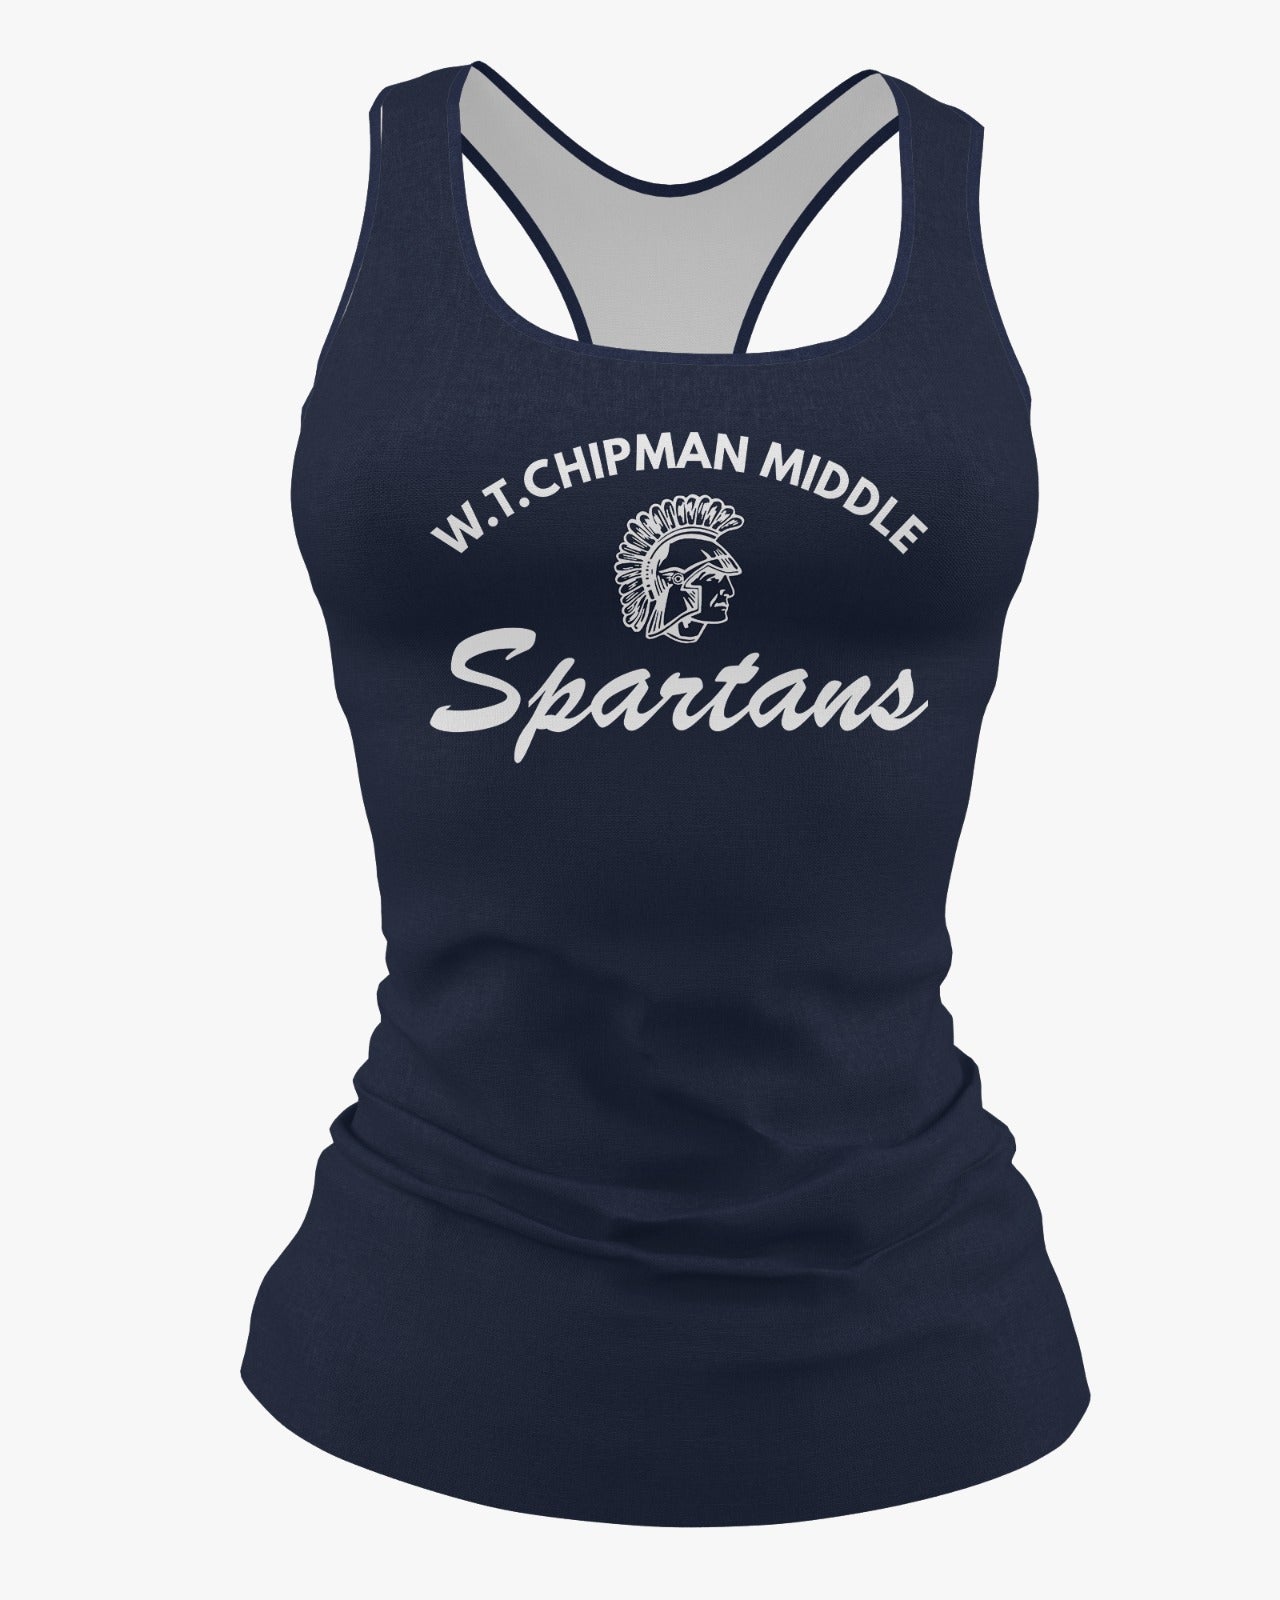 W.T. Chipman Dri Tech Women's Razorback ~ Spartan Script Navy "Only the Strong are Spartans"